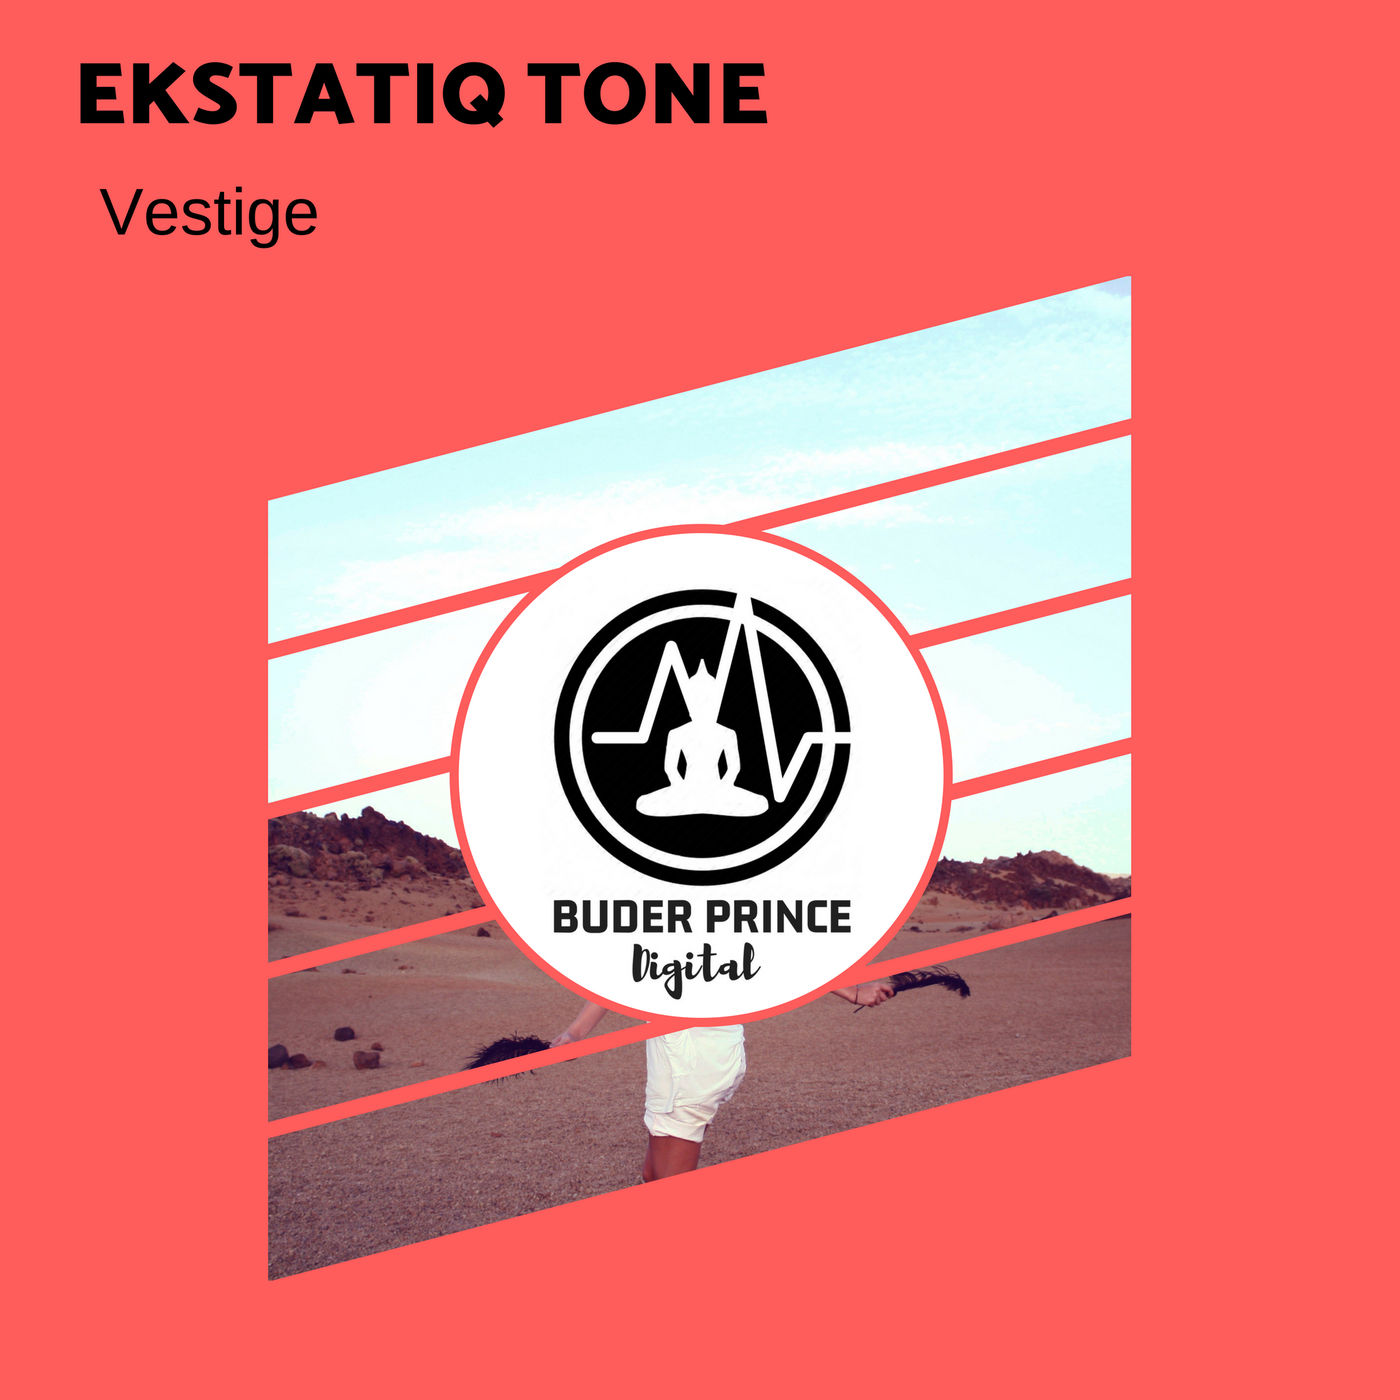 EKstatiQ Tone - Vestige / Buder Prince Digital